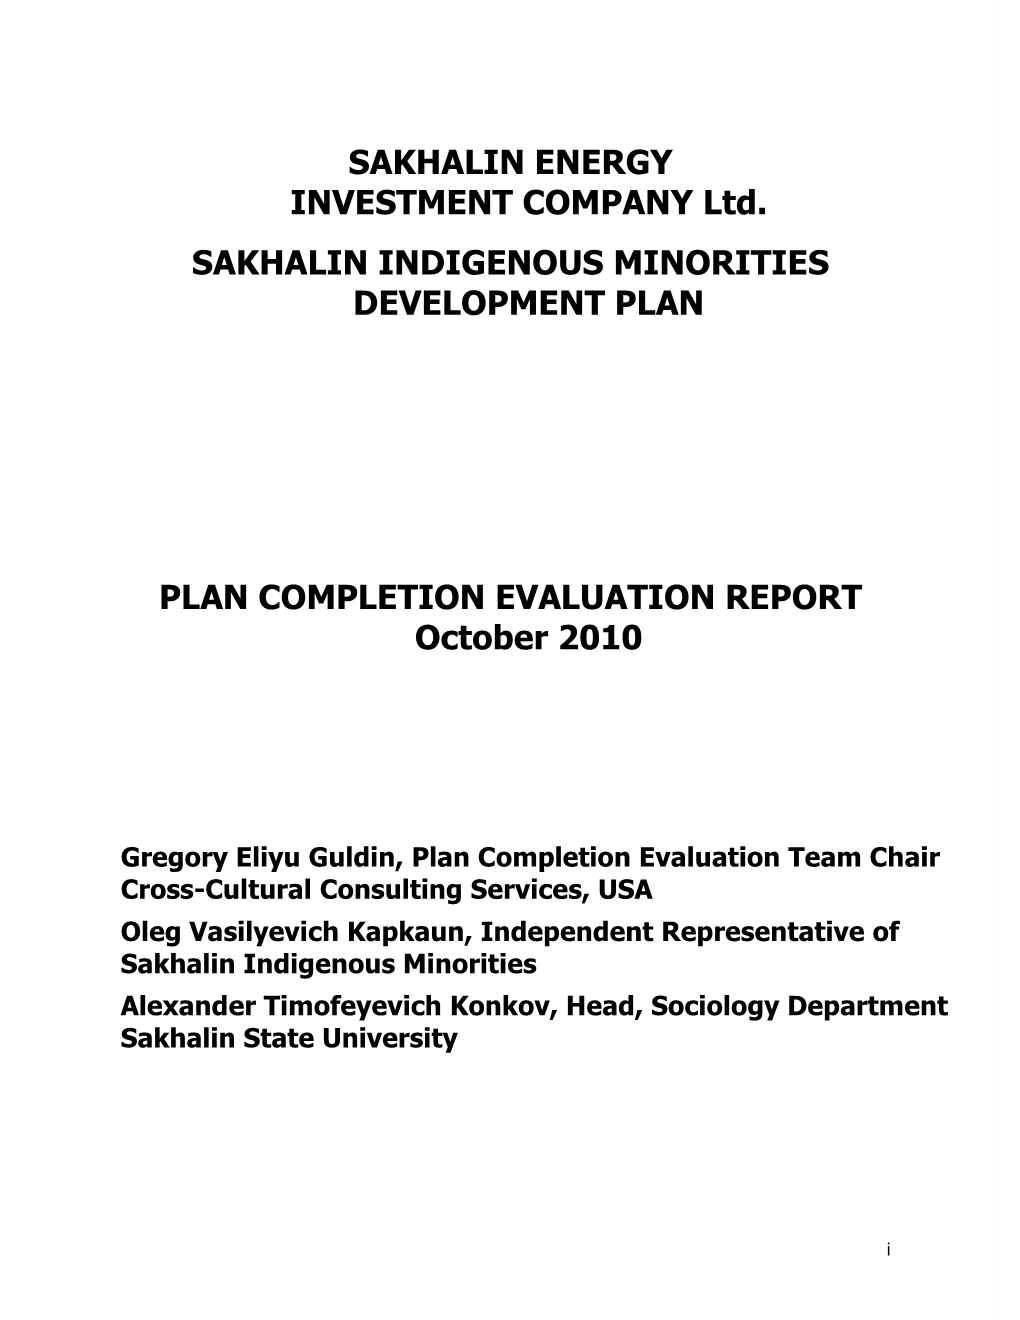 SAKHALIN ENERGY INVESTMENT COMPANY Ltd